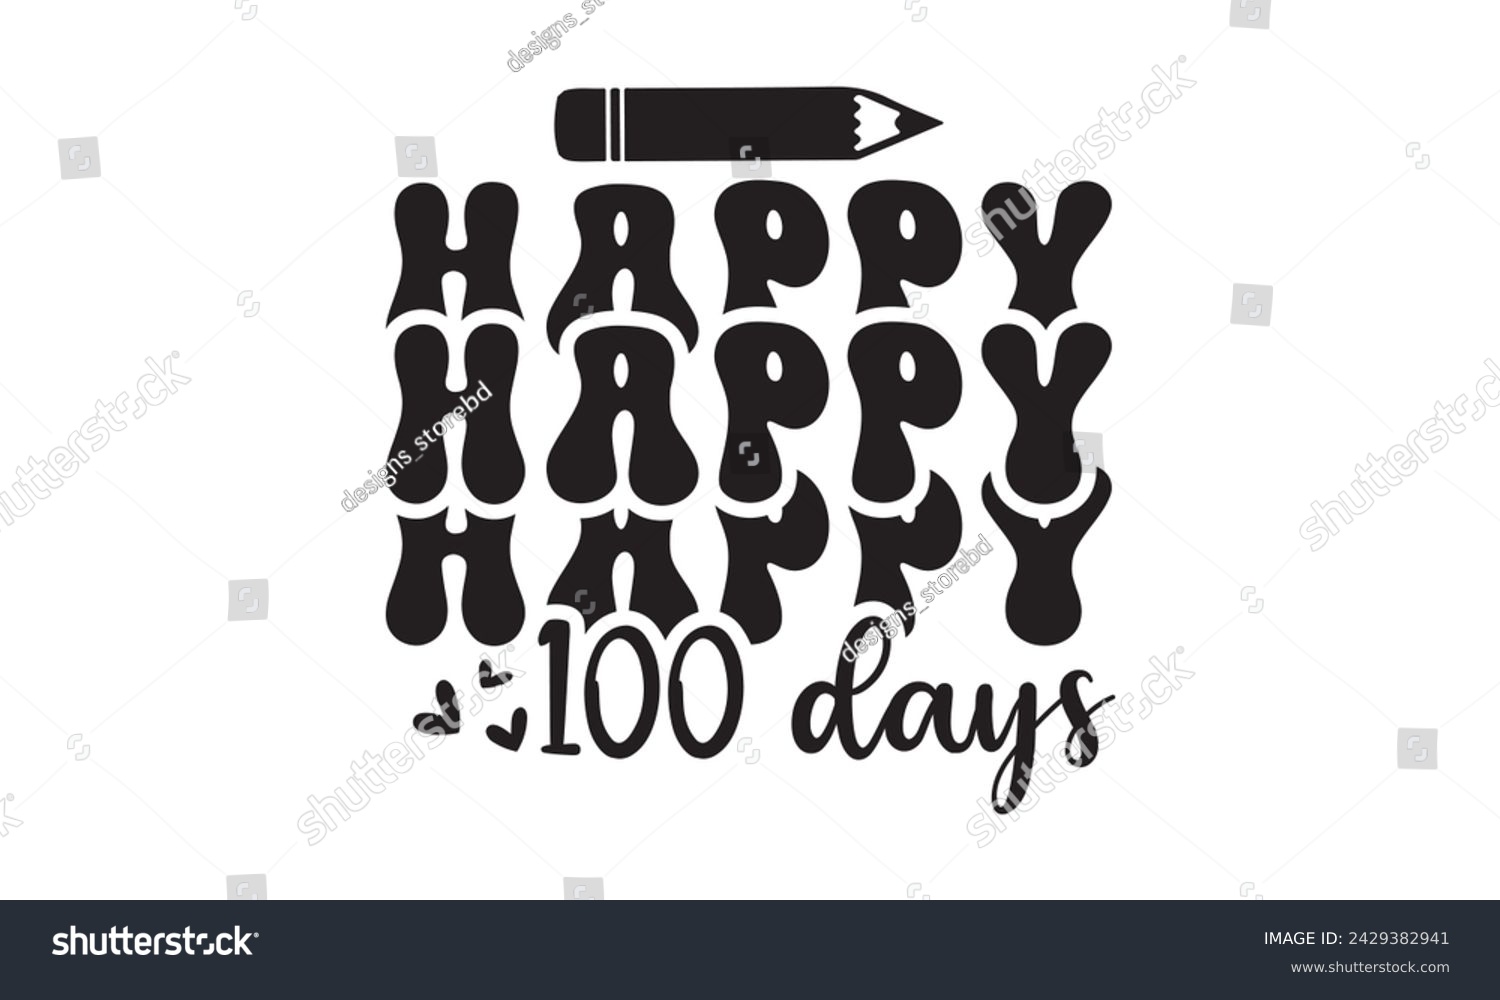 SVG of Happy 100 days,100 Days of school svg,Teacher svg,t-shirt design,Retro 100 Days svg,funny 100 Days Of School svg,Printable Vector Illustration,Cut Files Cricut,Silhouette,png,Laser cut svg